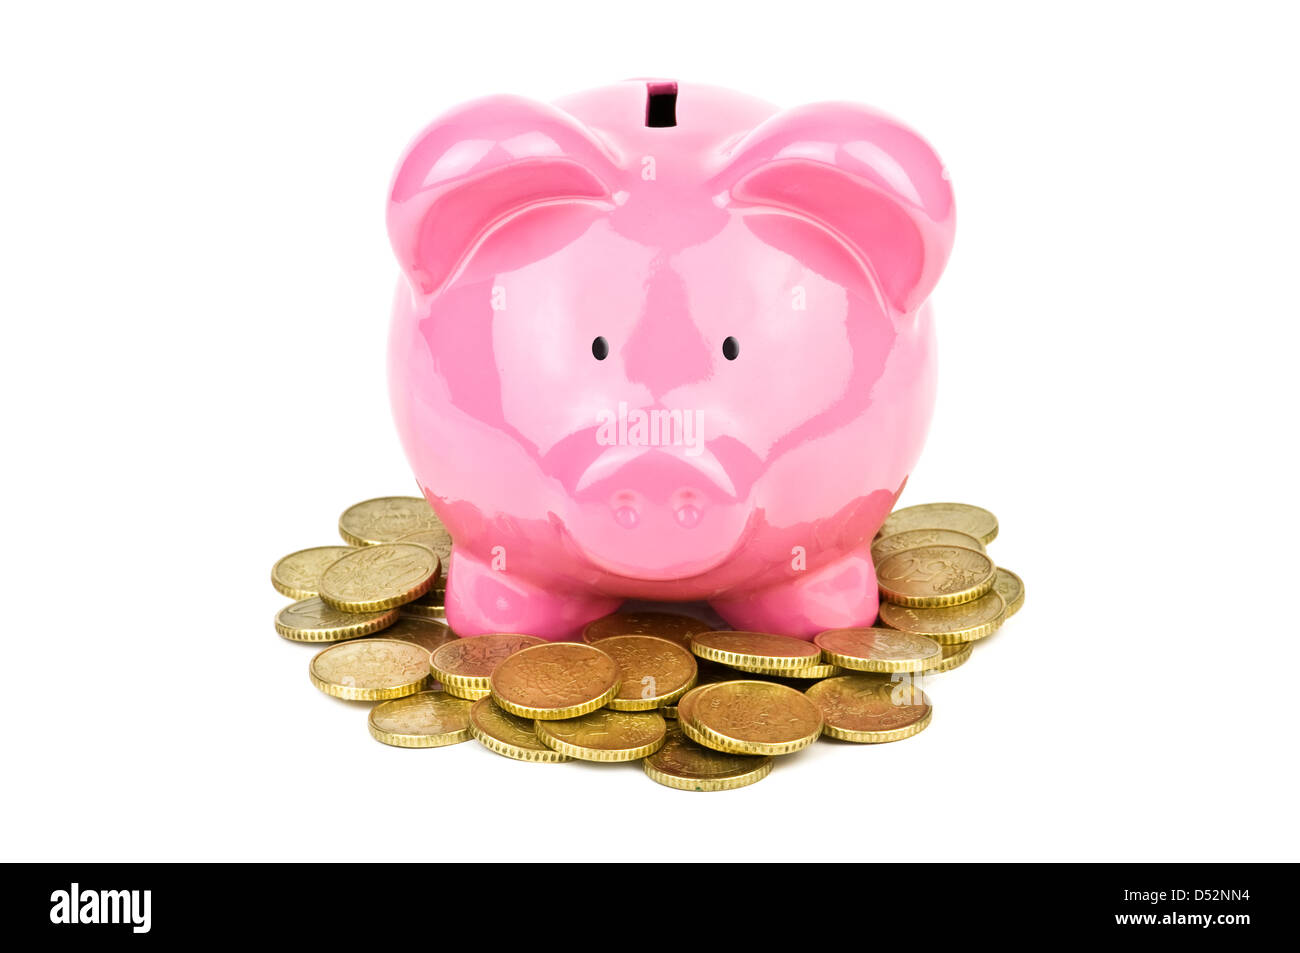 pink pig money box isolated Stock Photo